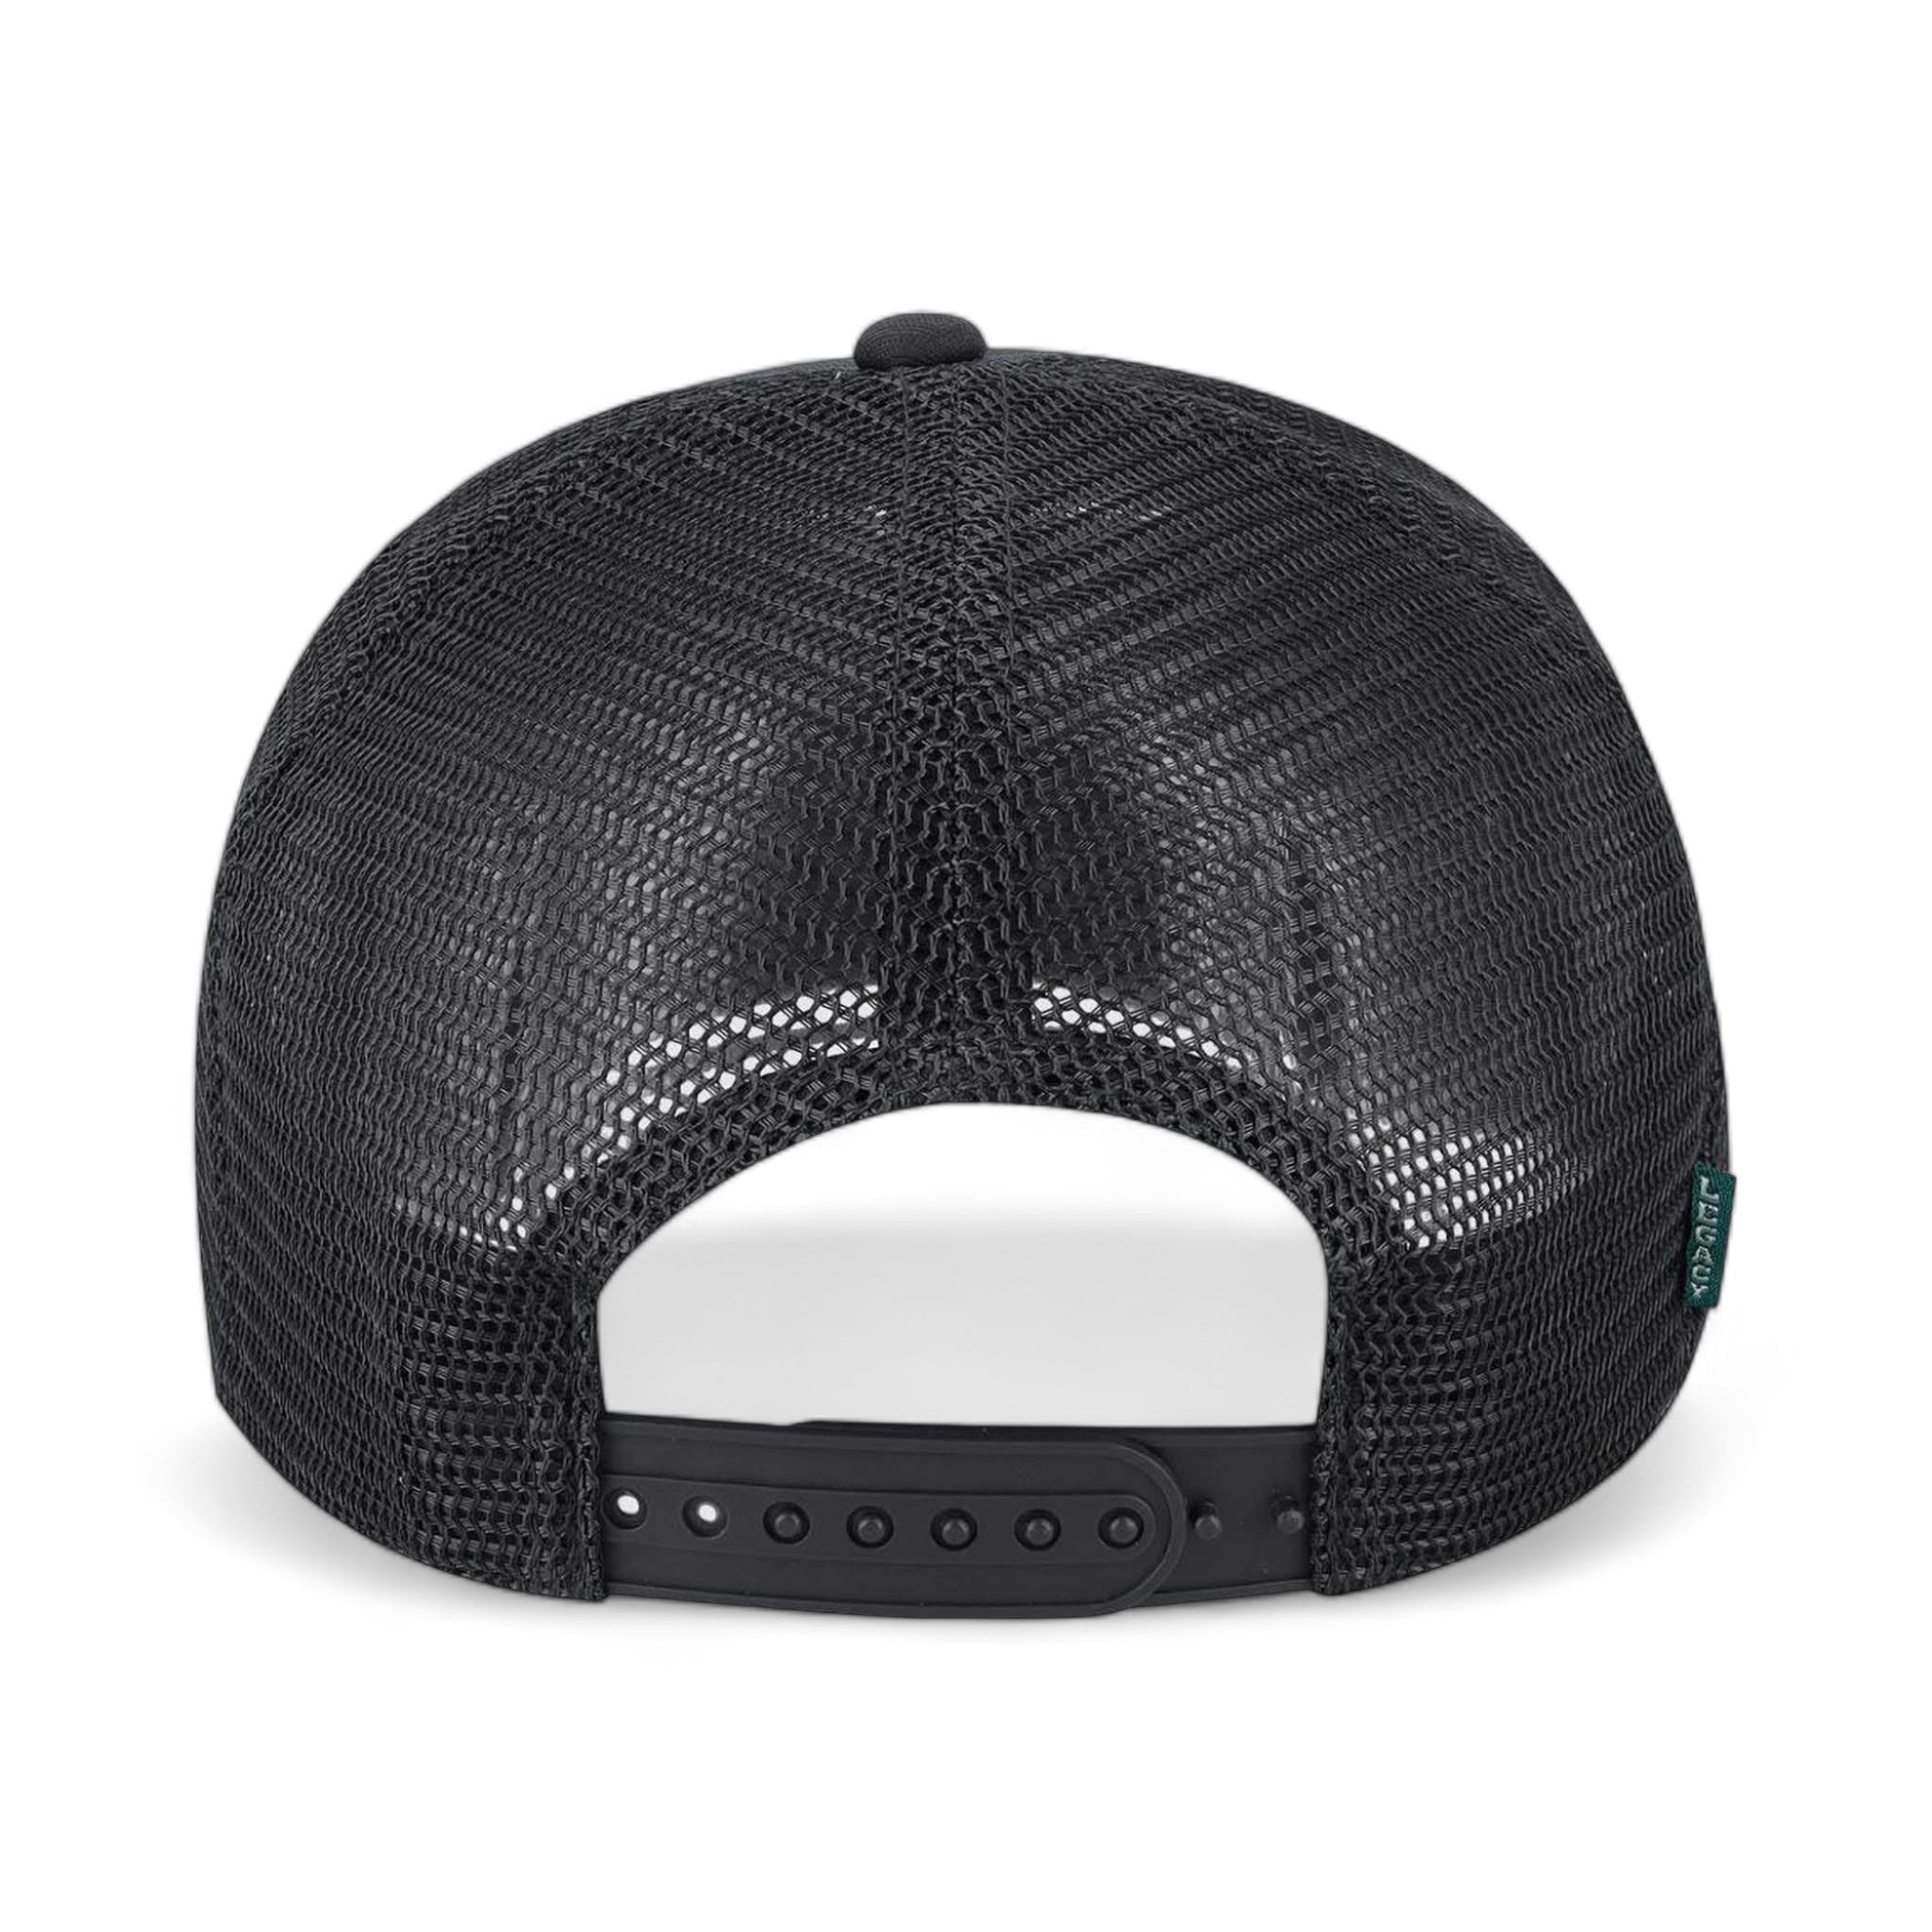 Back view of LEGACY LTA custom hat in black